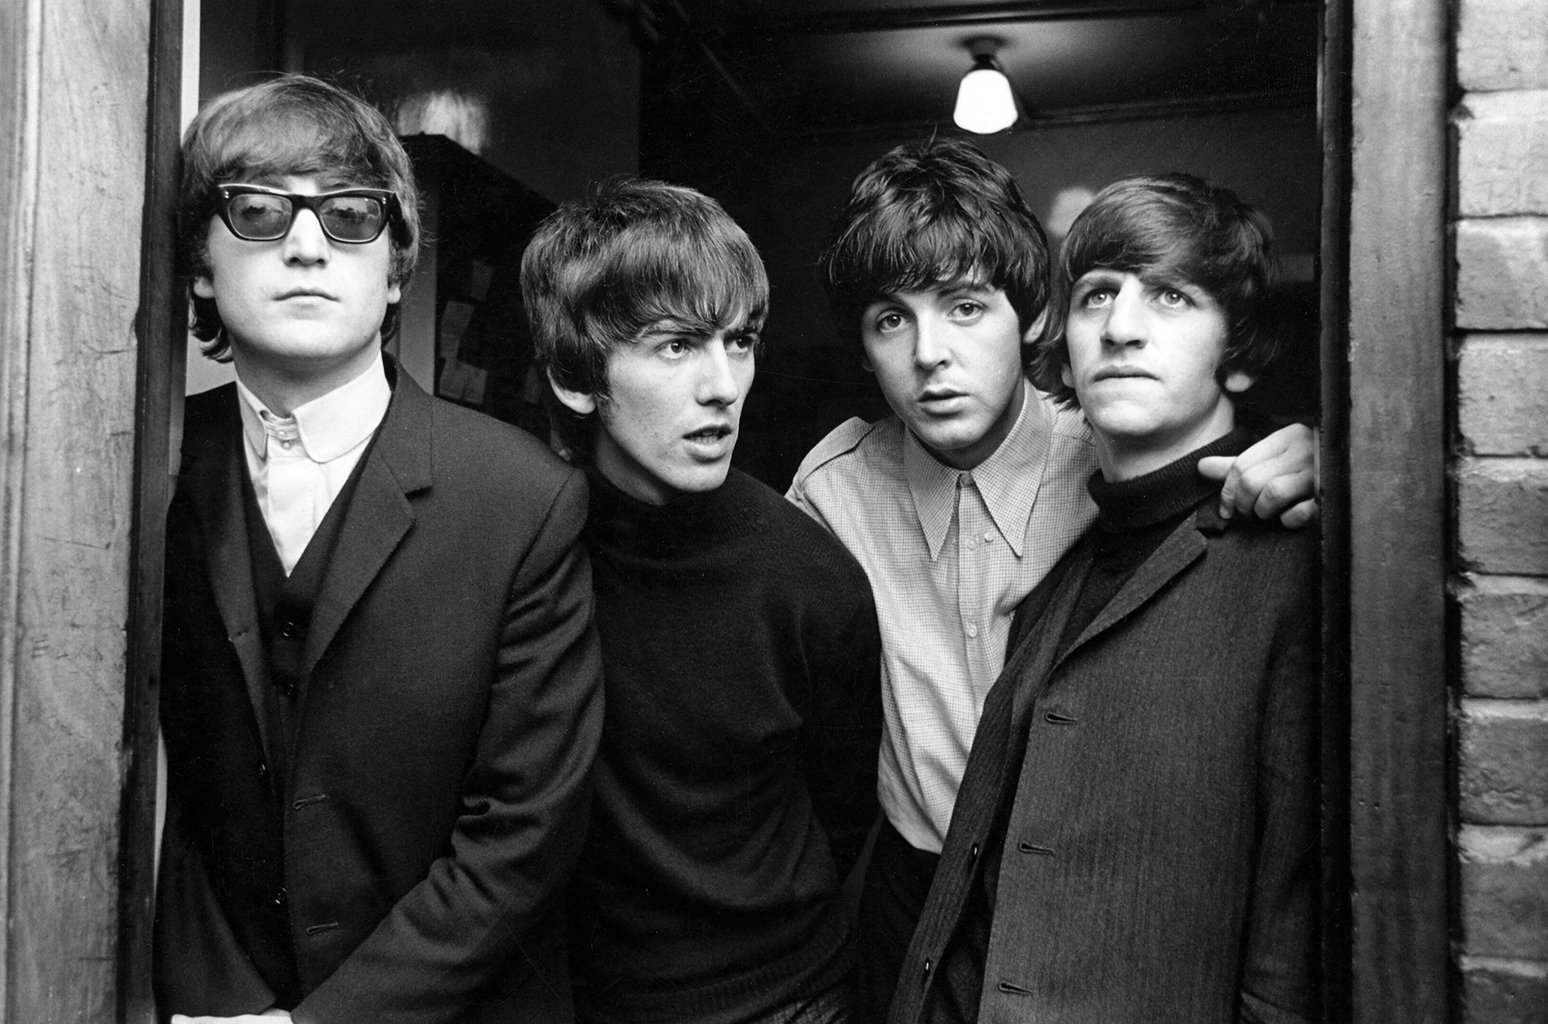 The Beatles - Penny Lane